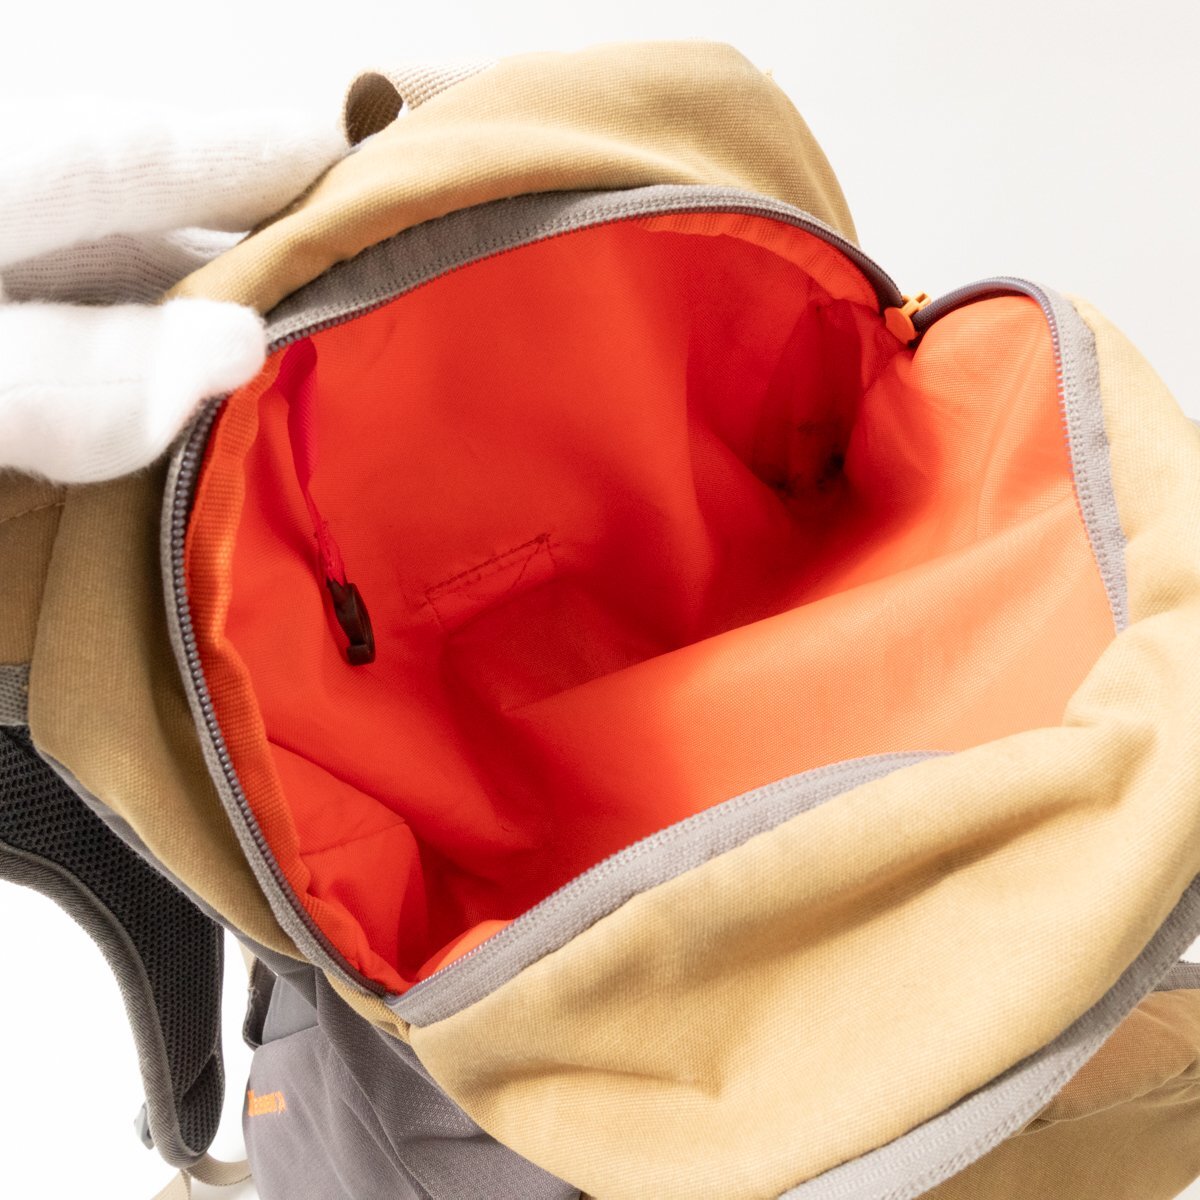 [1 jpy start ]MAMMUT Mammut NEON ELEMENT 22 neon Element 22 backpack beige gray orange nylon canvas bag